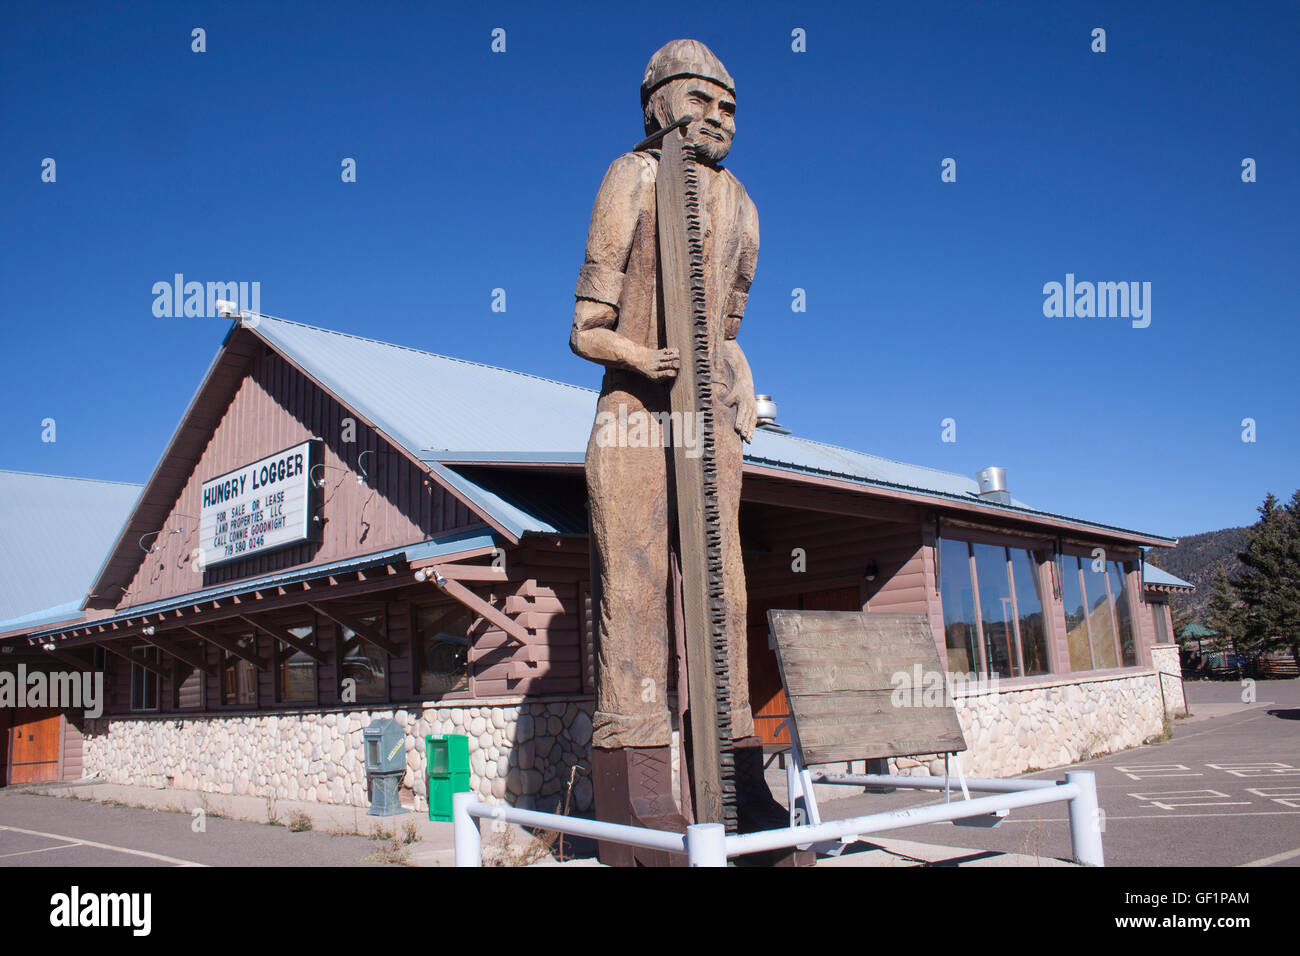 Biggin The Lumberjack wood carving in South Fork Colorado Stock Photo